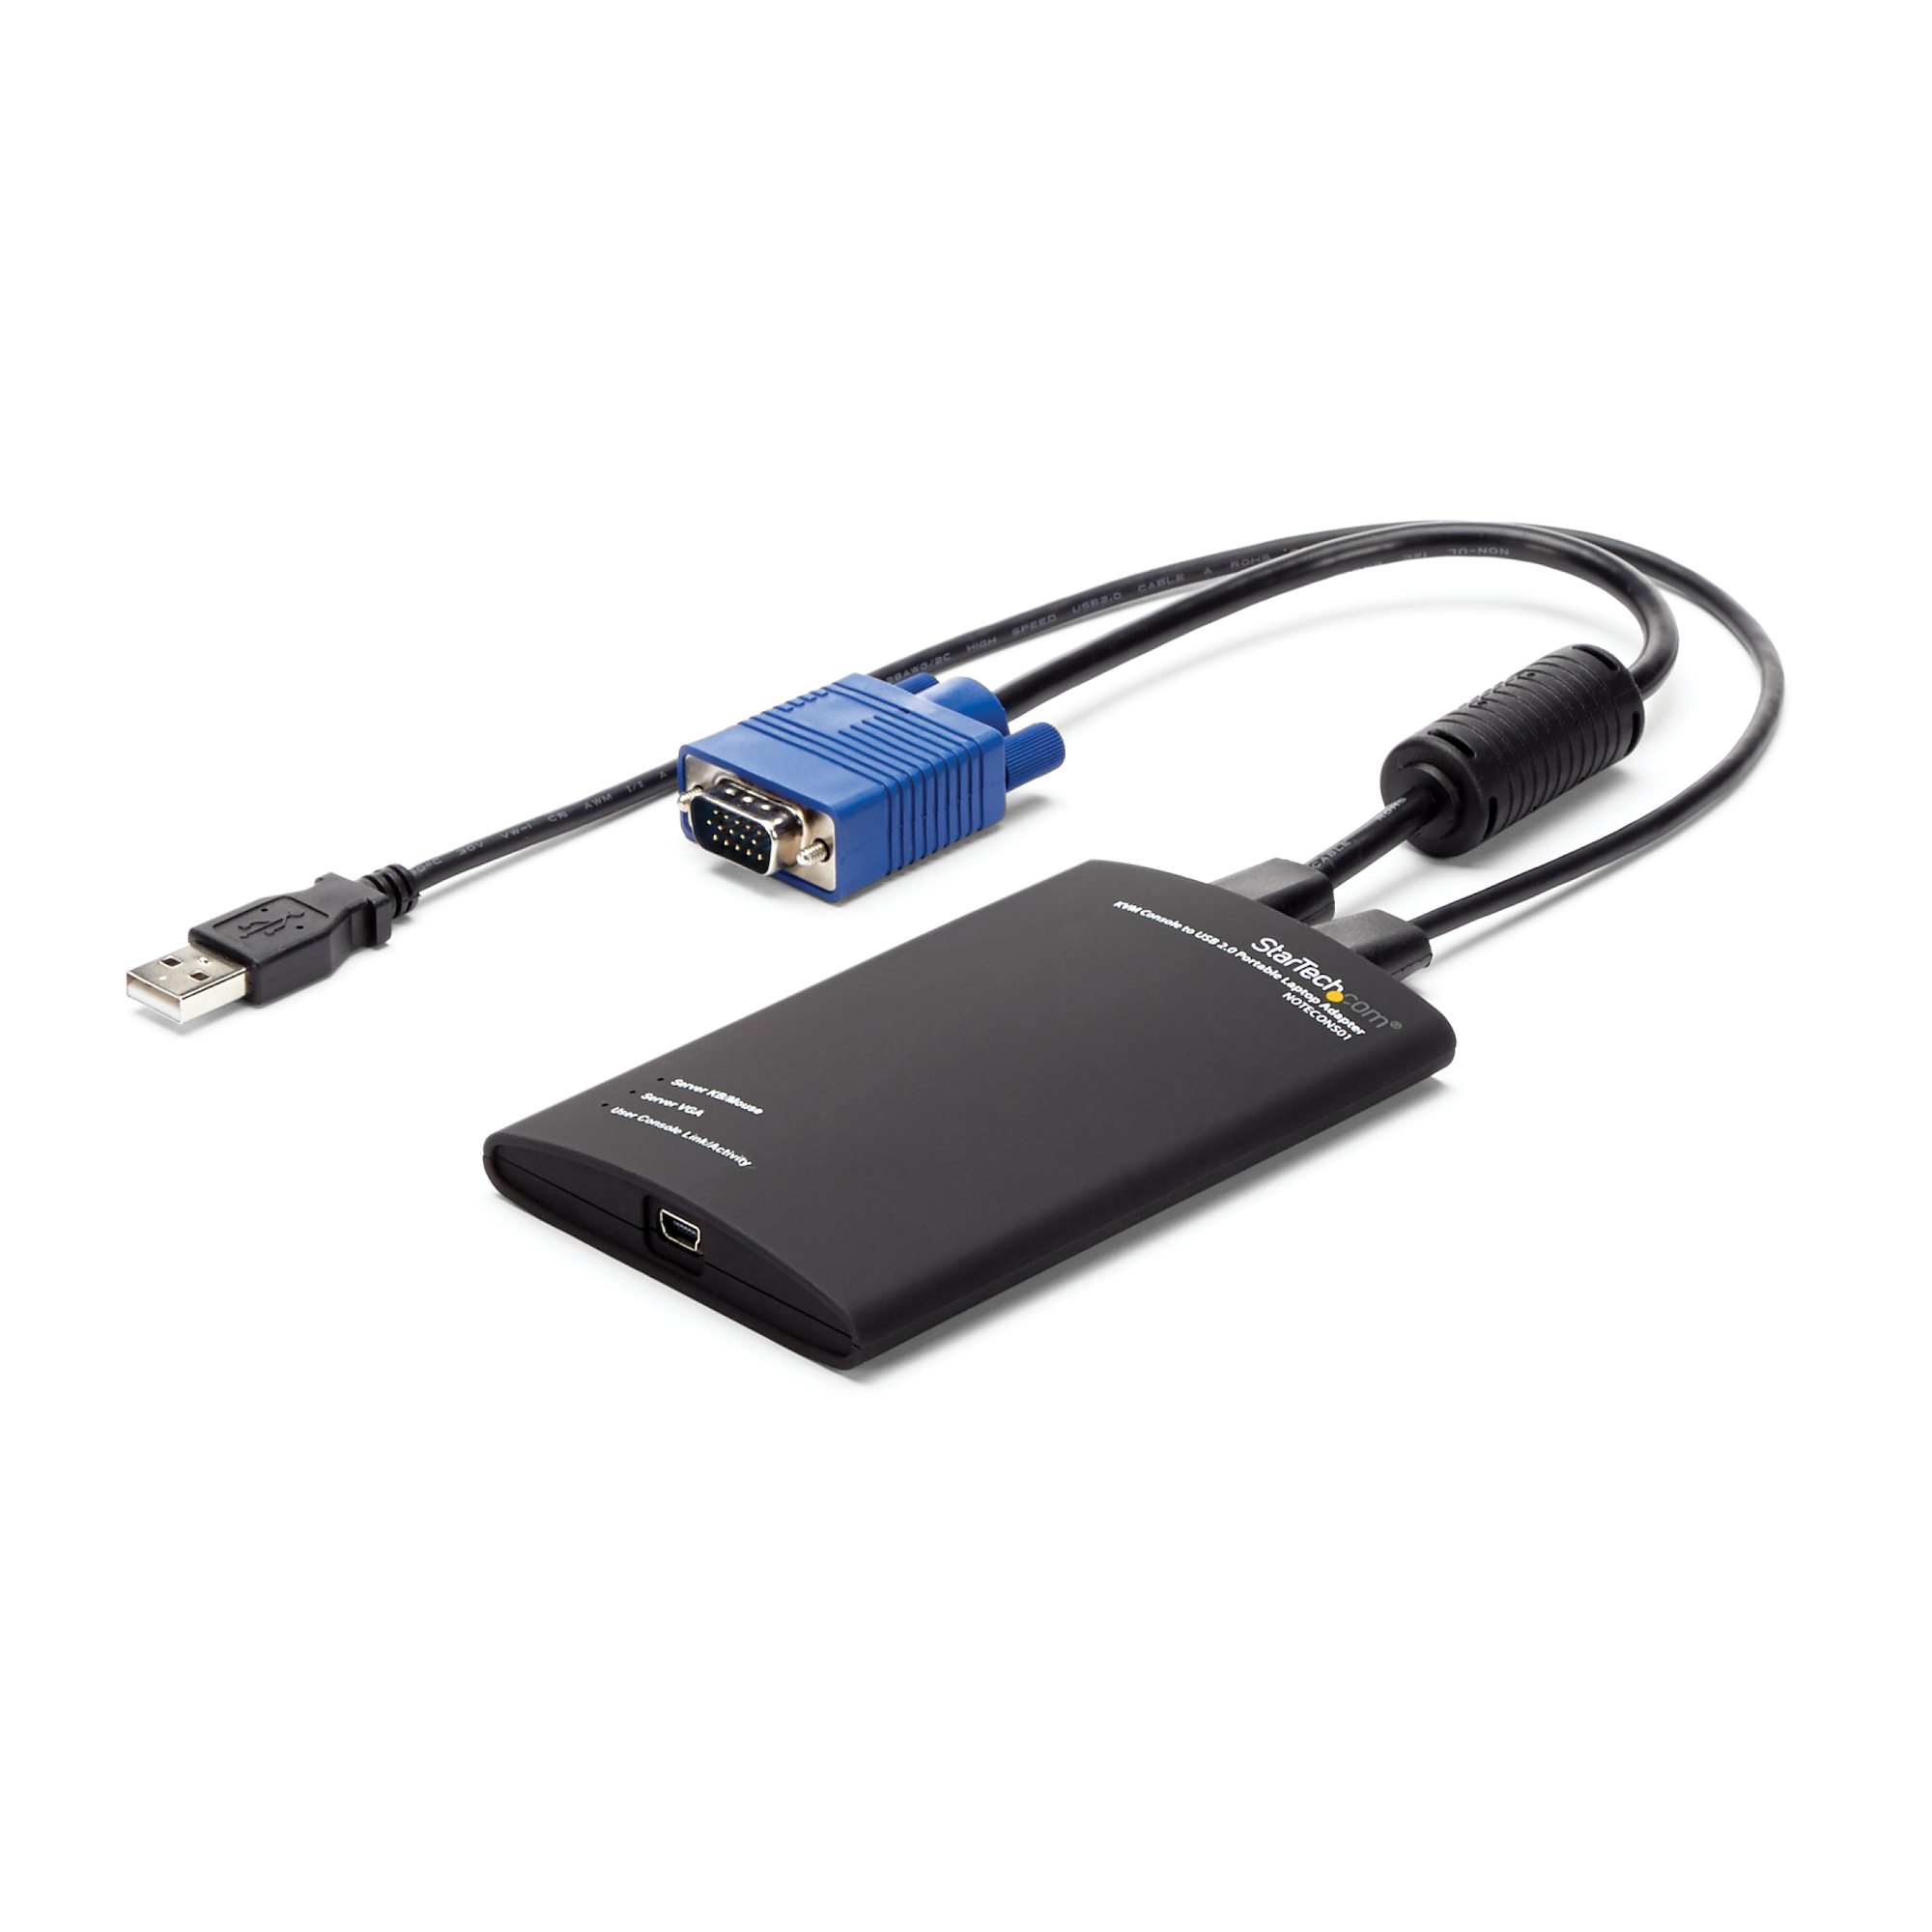 【NOTECONS01】KVM TO USB LAPTOP CRASH CART